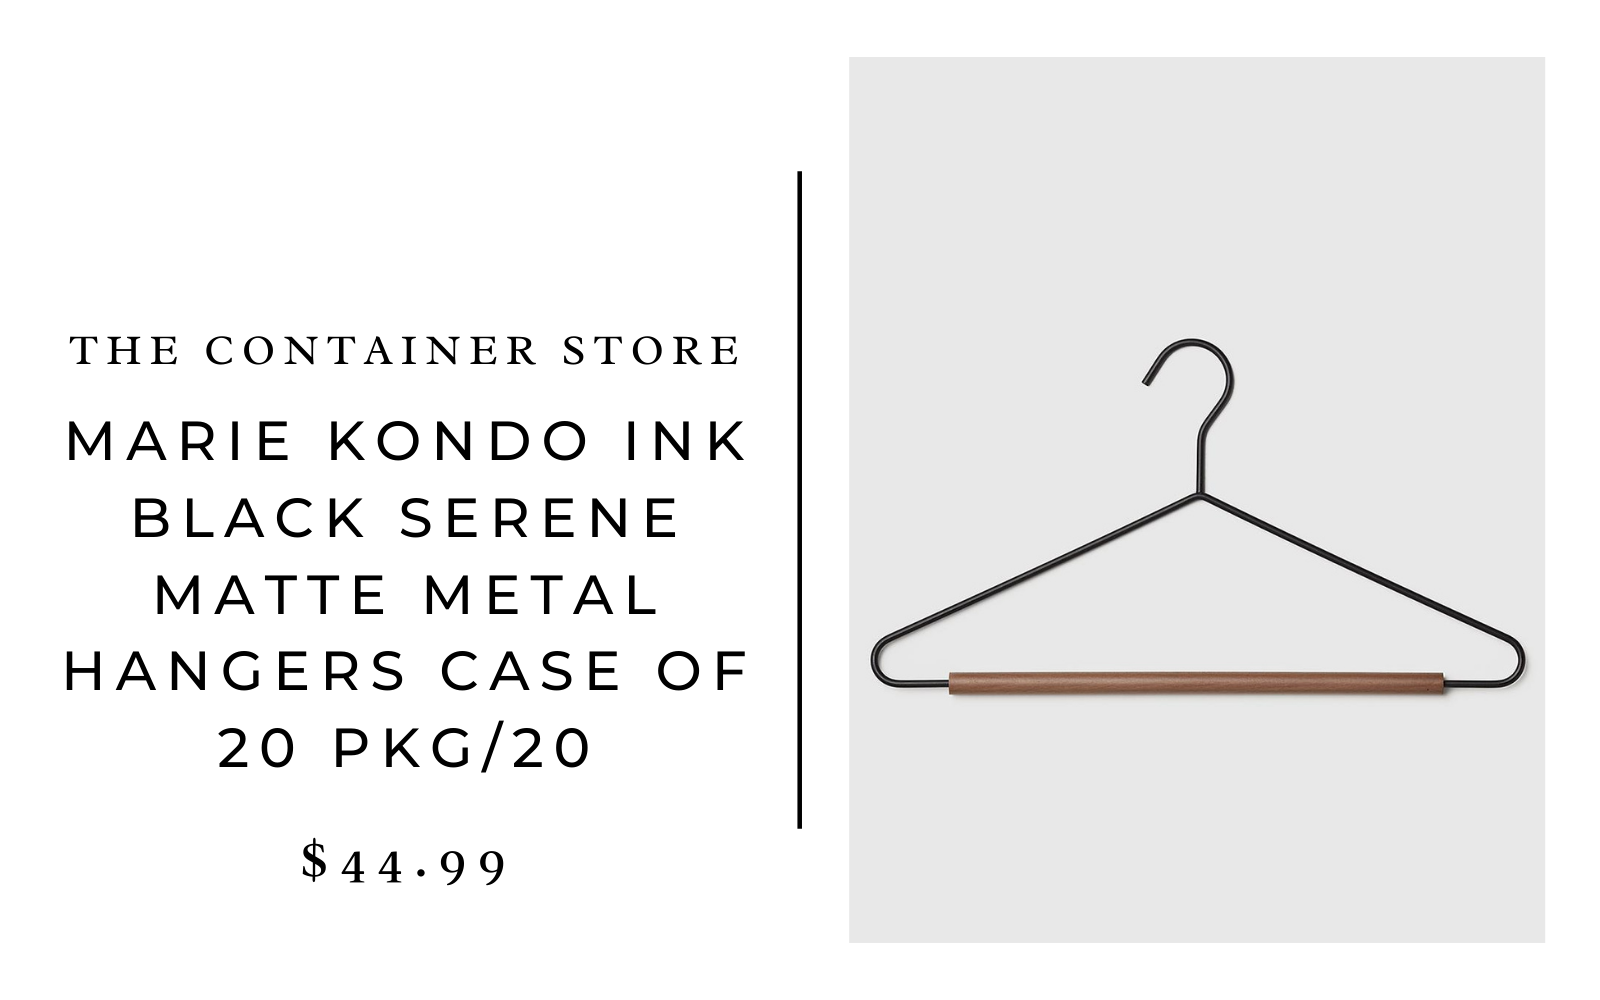 The Container Store Marie Kondo Ink Black Serene Matte Metal Hangers Case of 20 Pkg